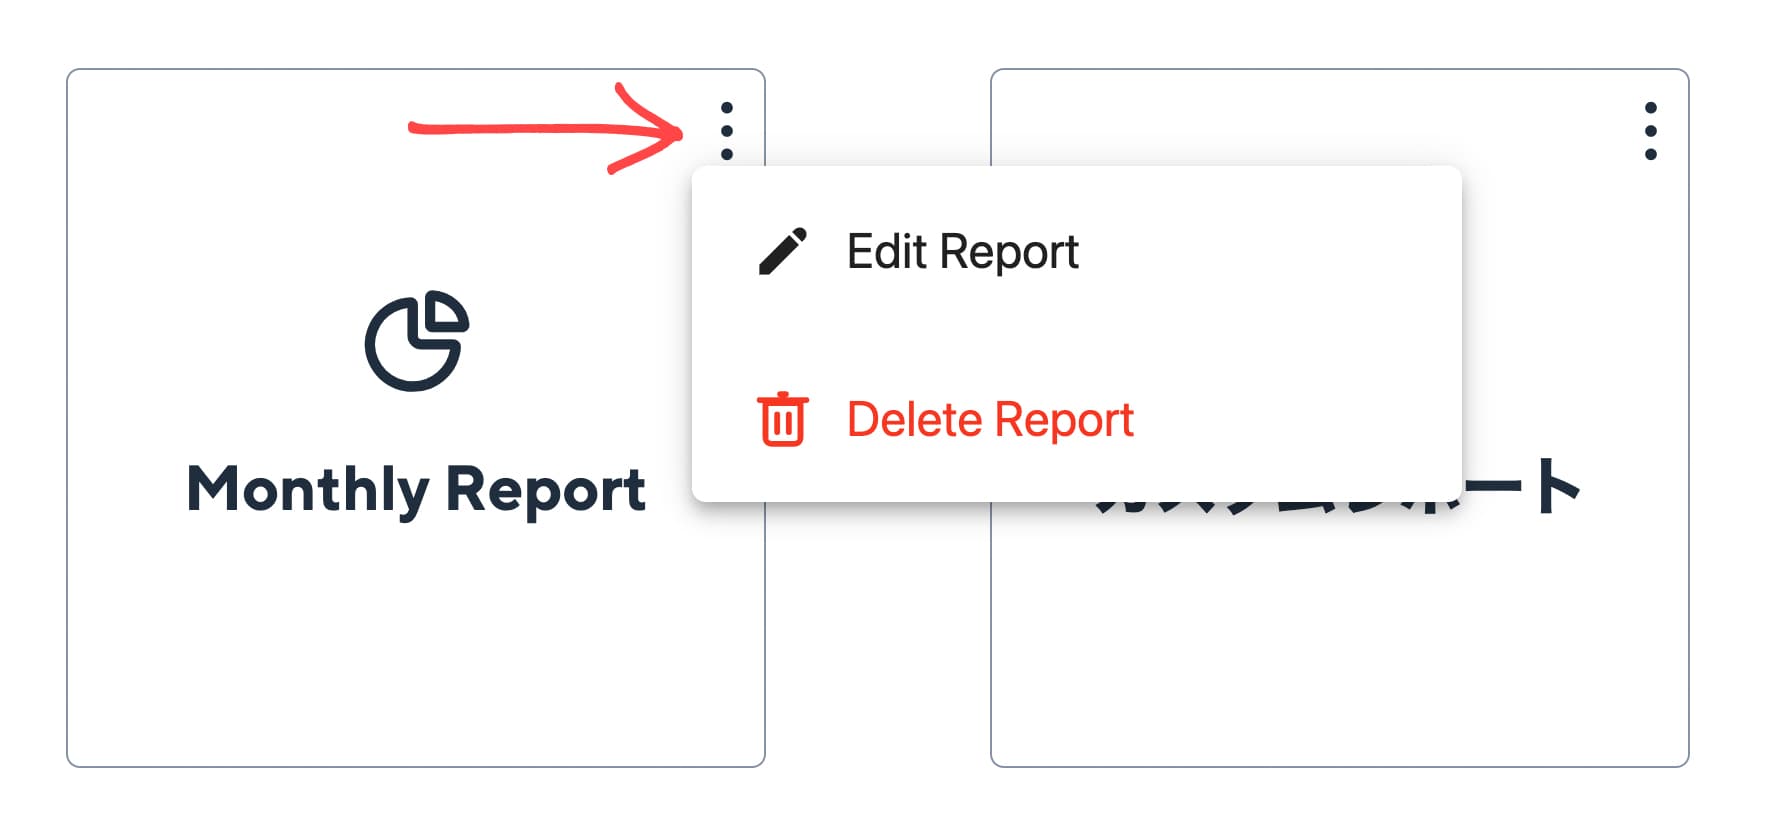 custom_report_to_Edit_or_Delete.jpg